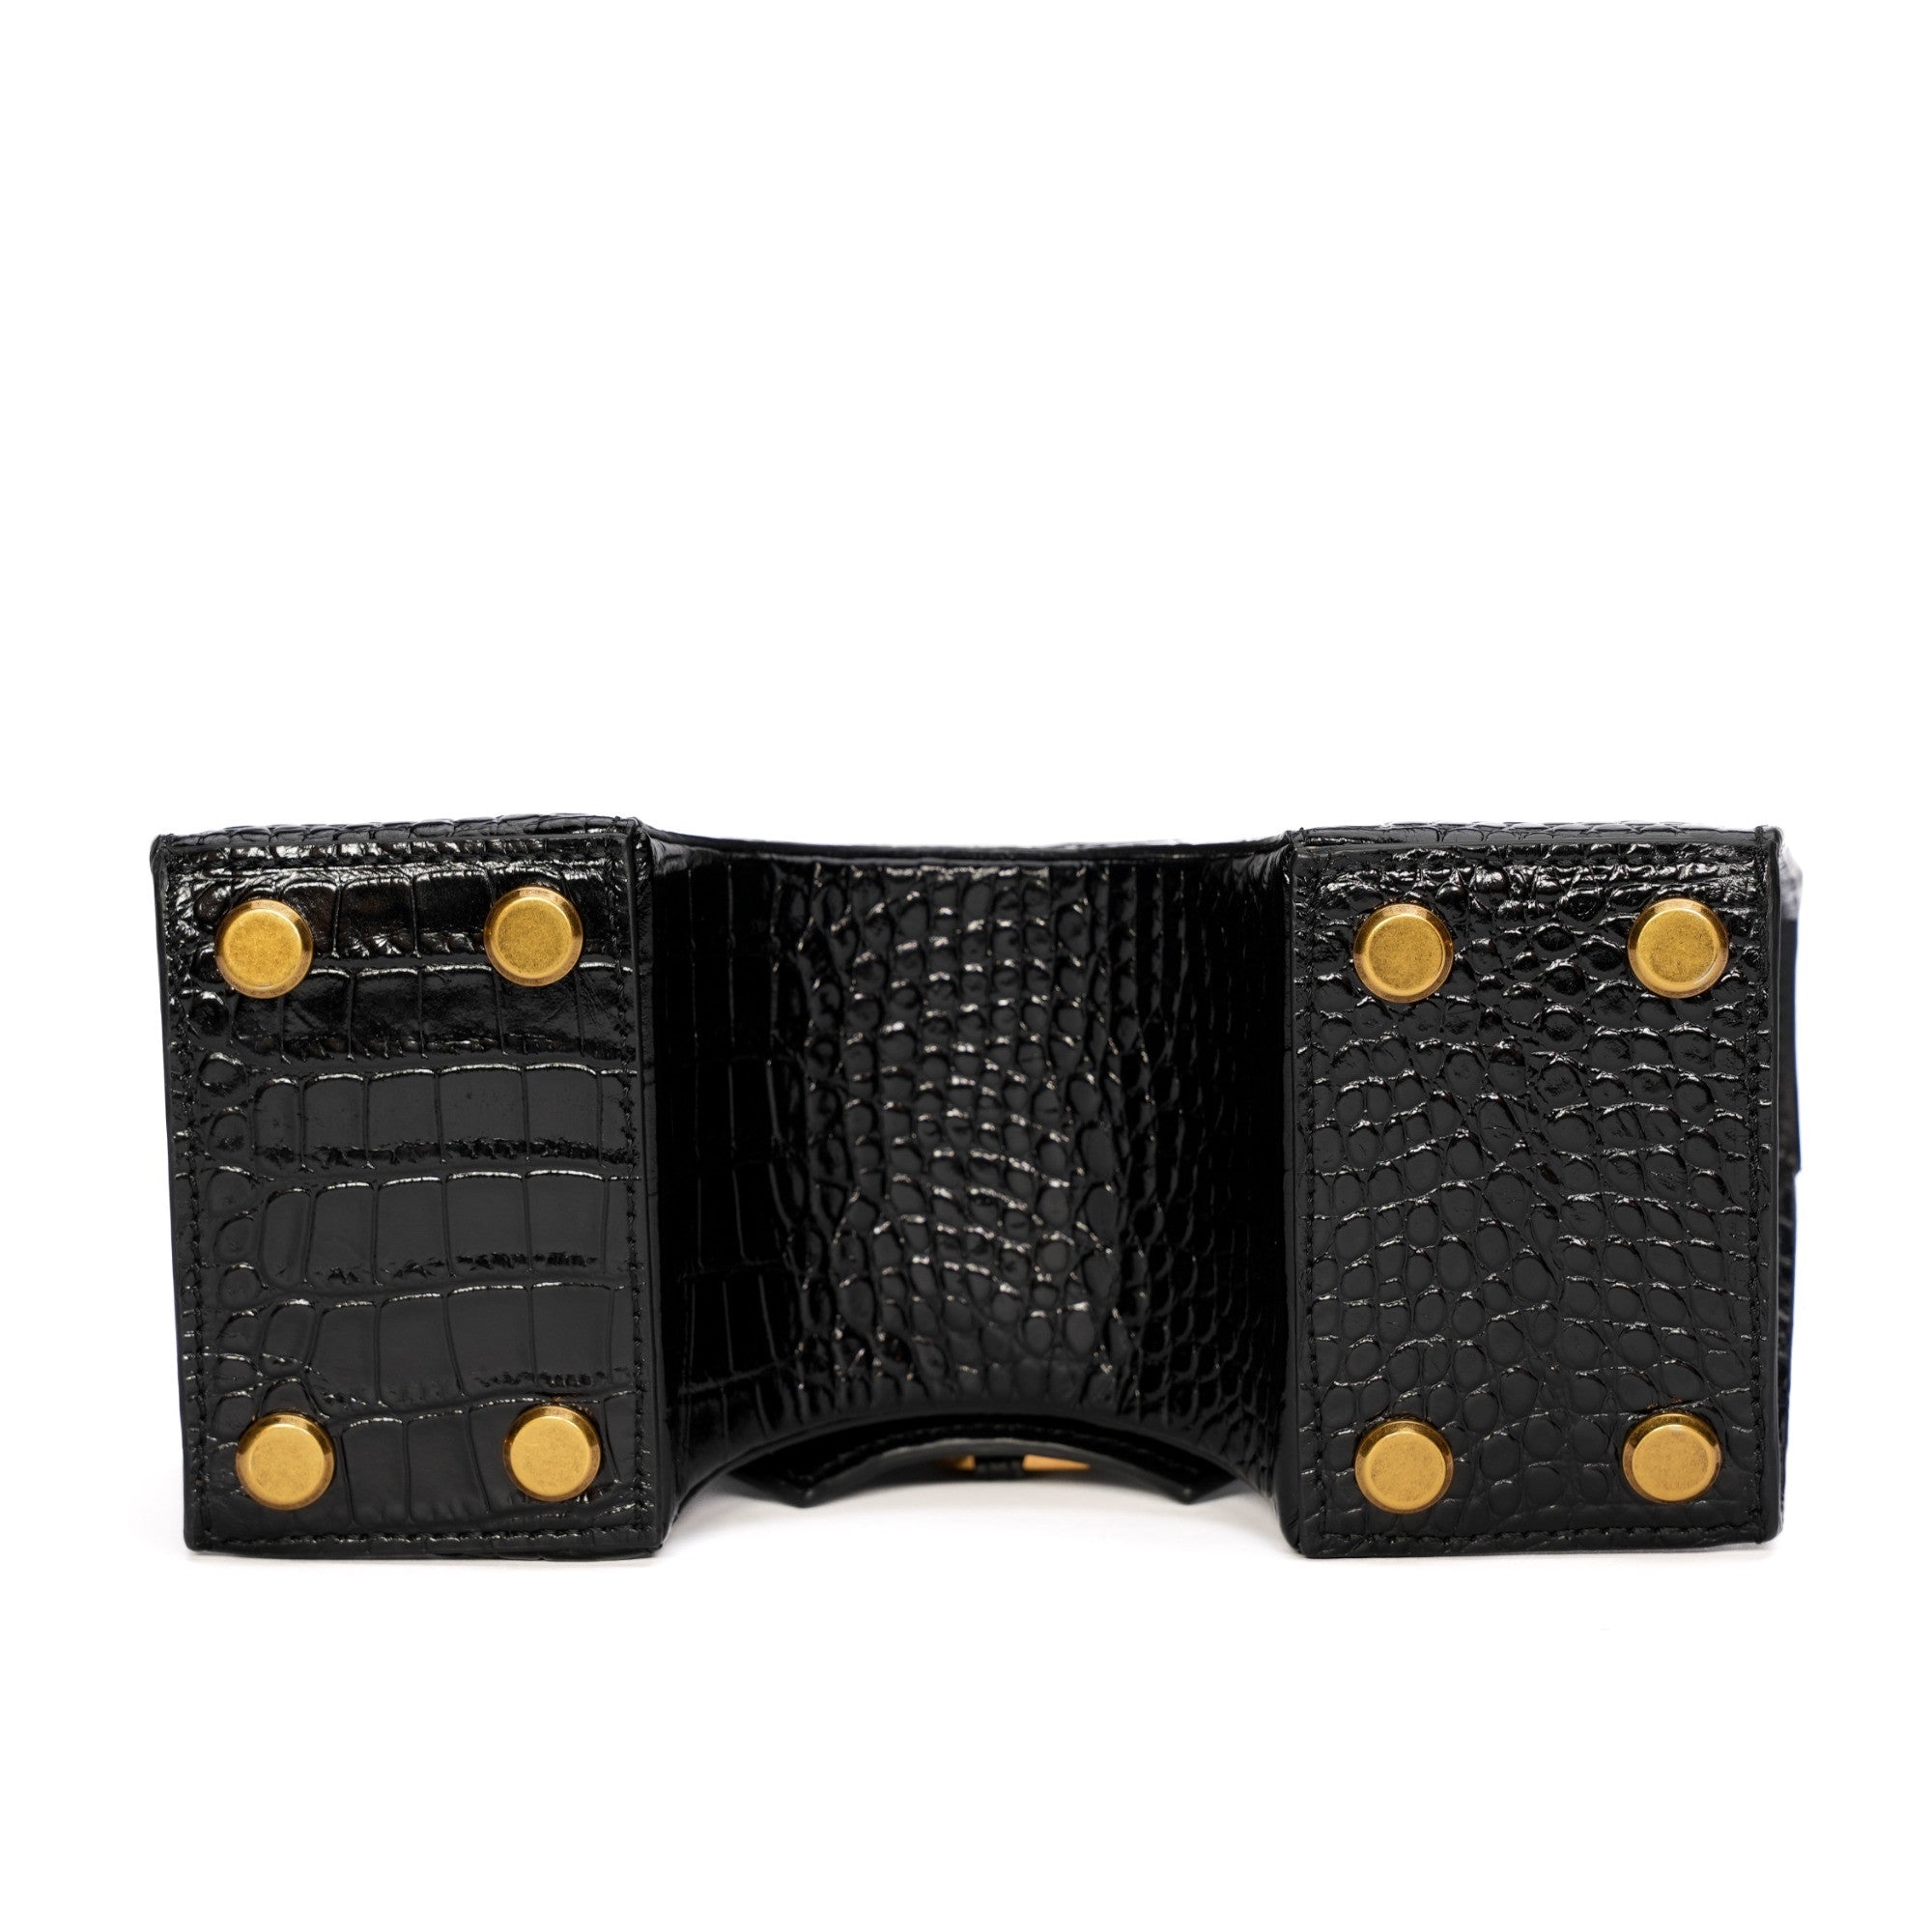 RADOŠ. Alligator bag in crocodile effect leather